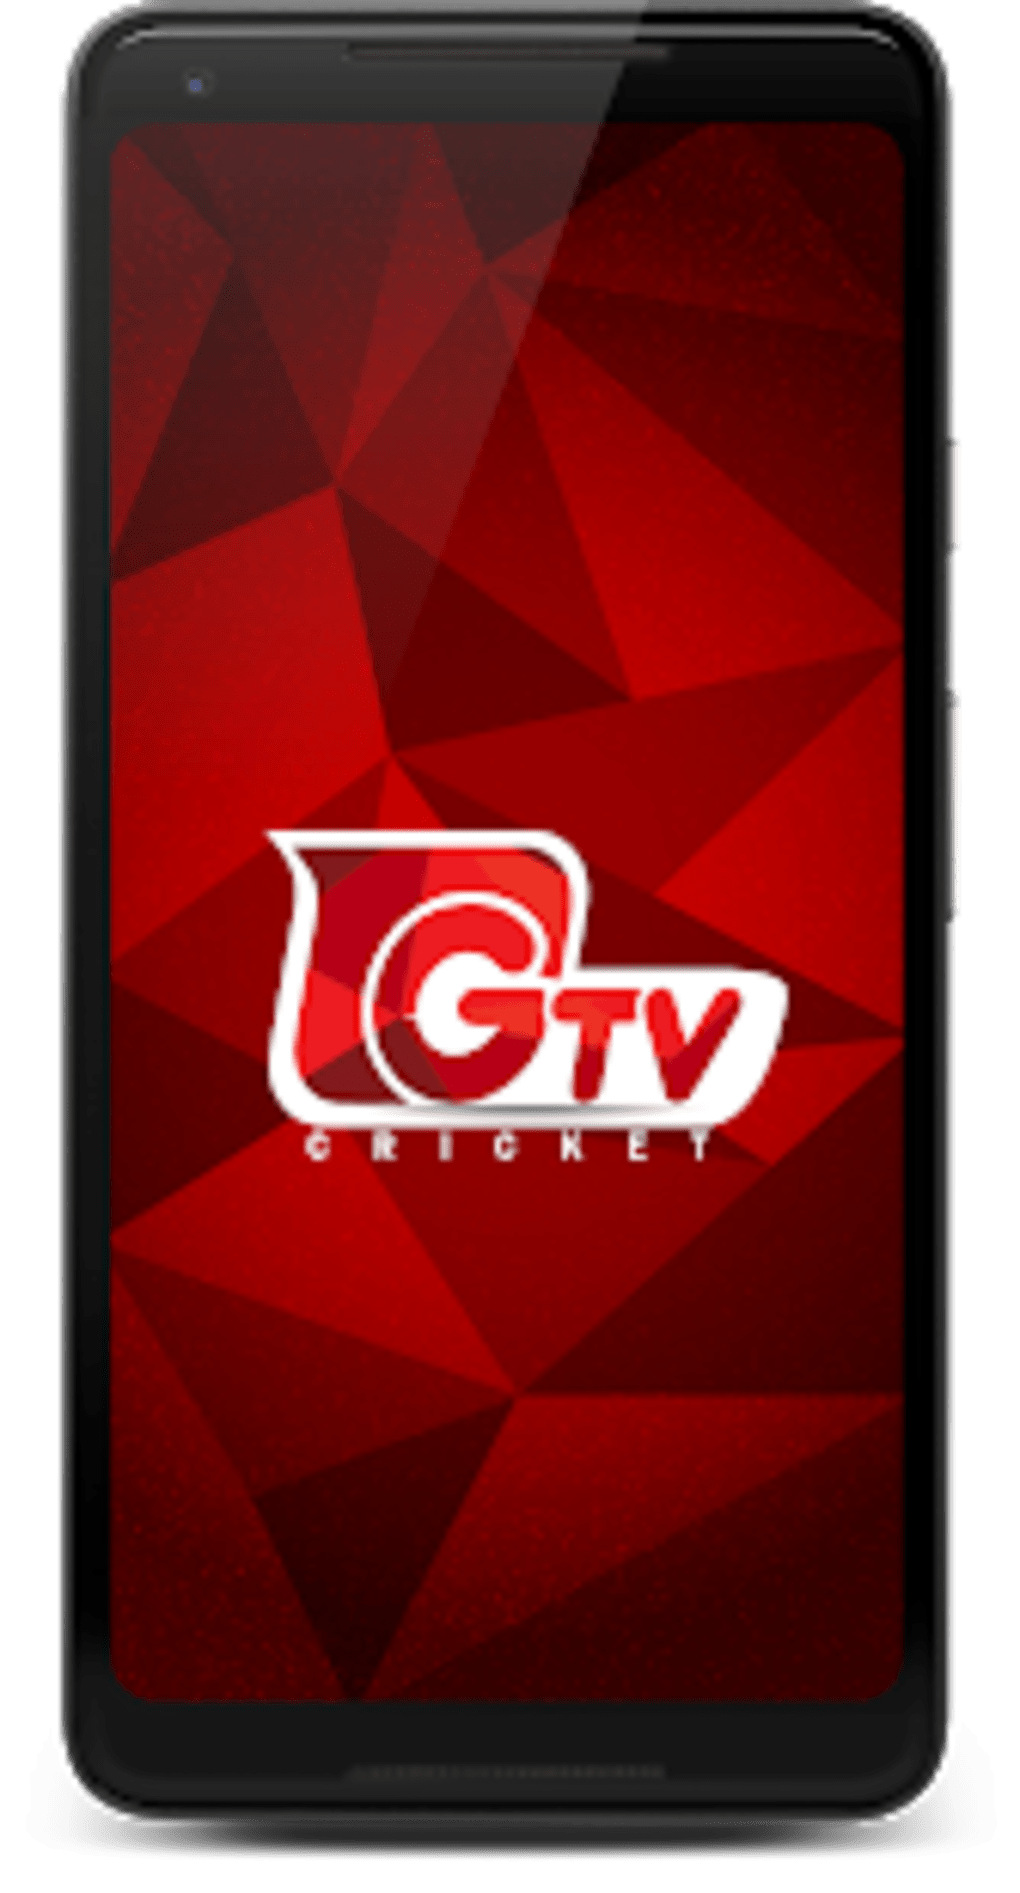 gtv live video cricket